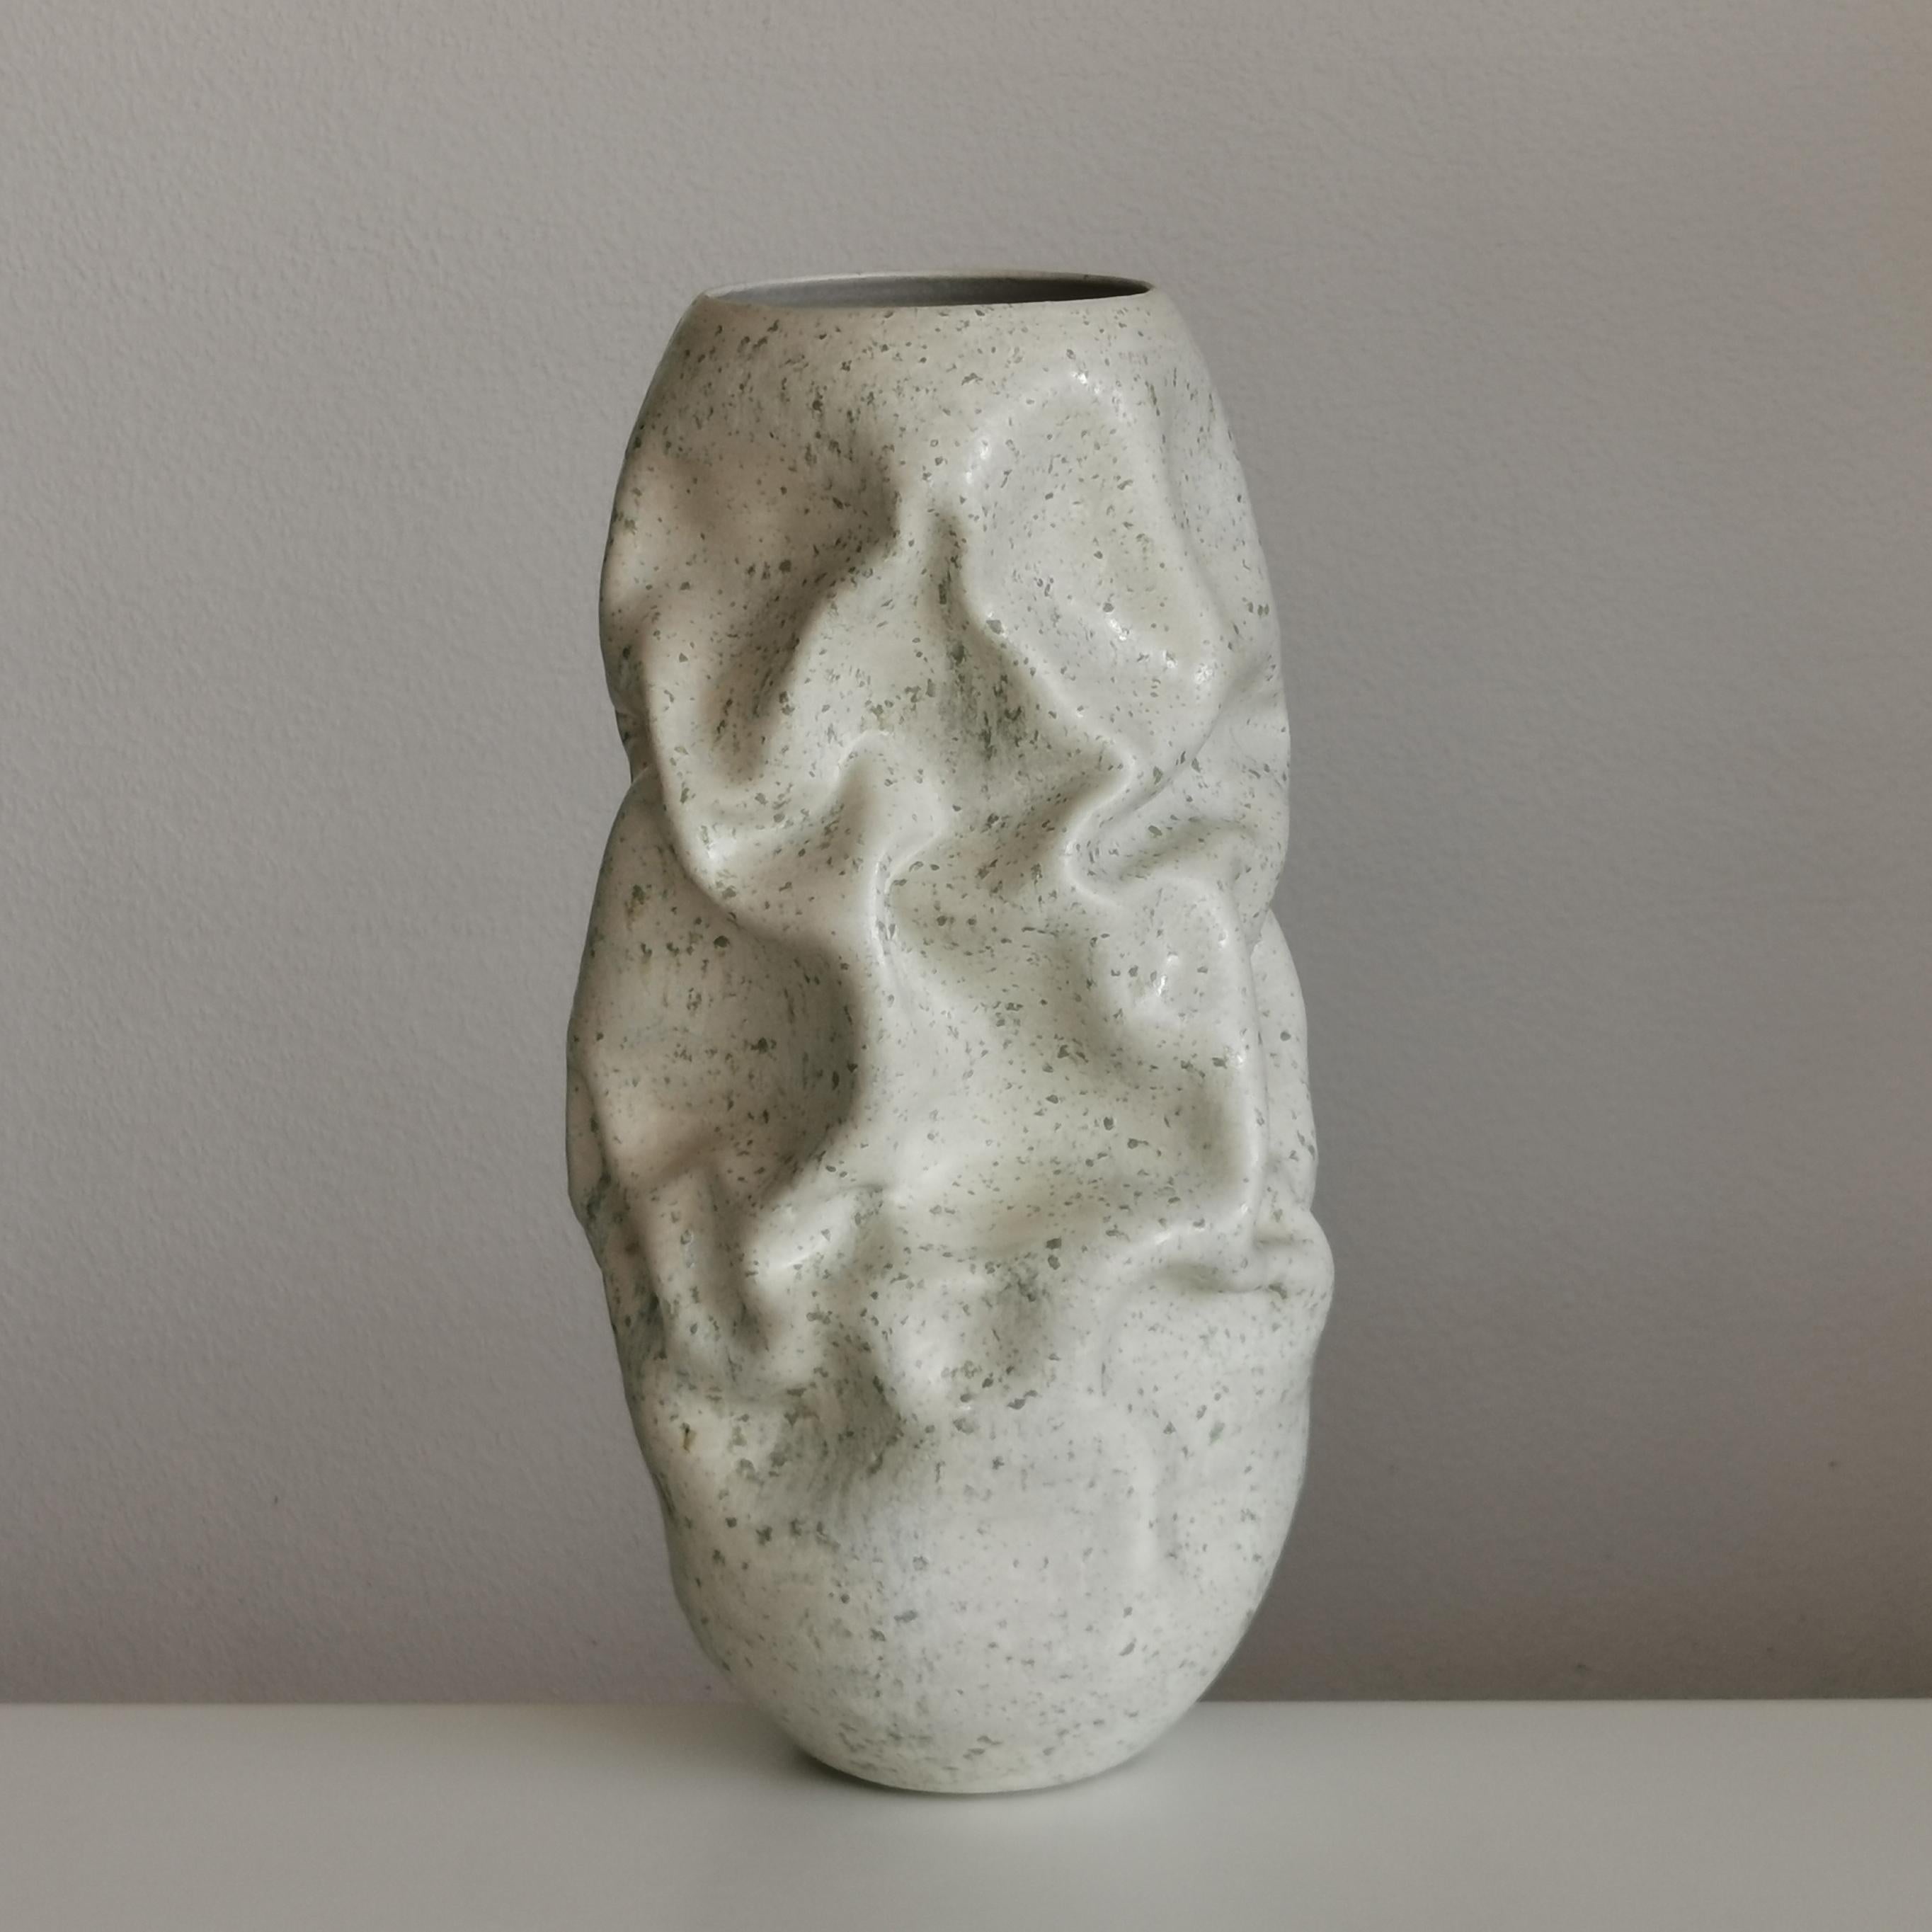 Organic Modern Medium White Crumpled Form, Green Chrystals, Vessel No.128, Ceramic Sculpture For Sale